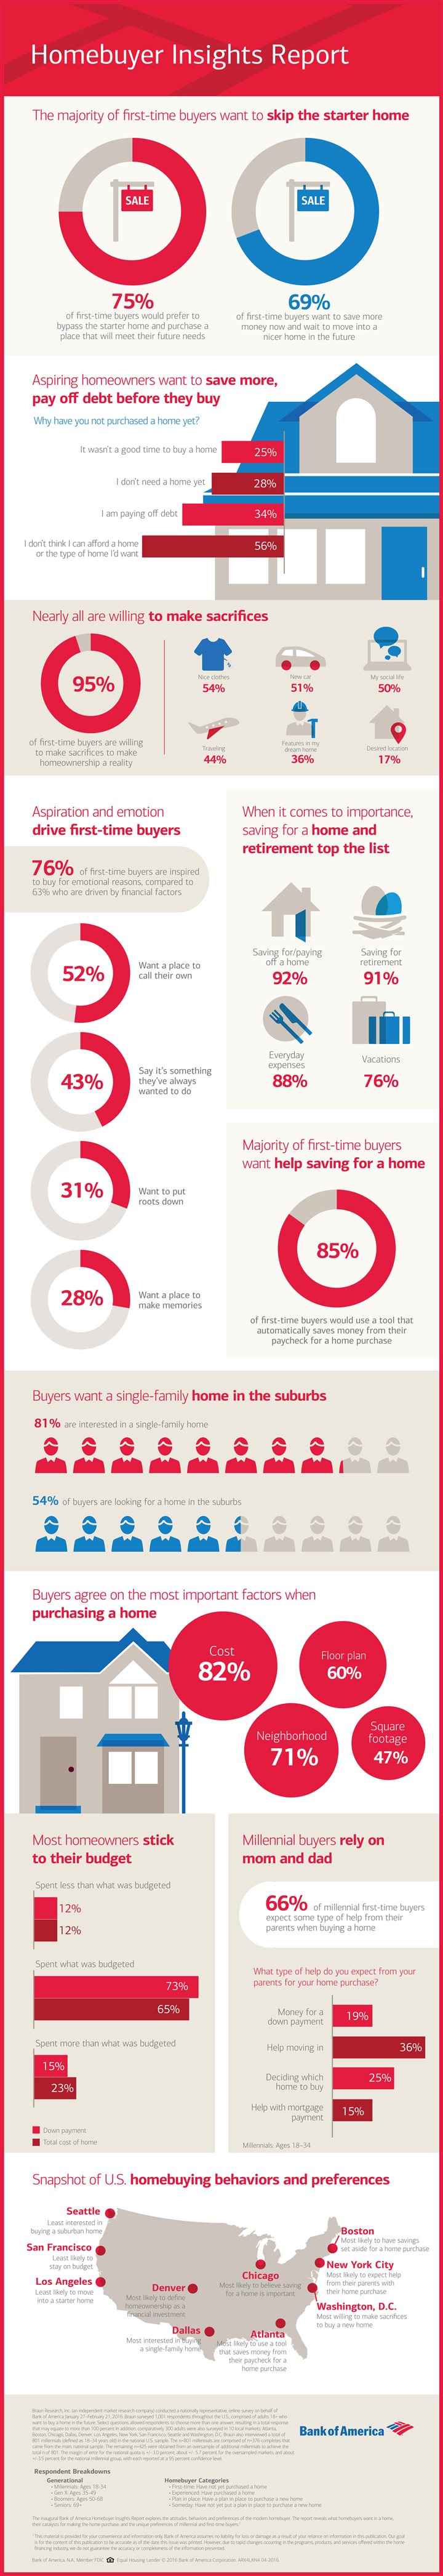 Homebuyer insights report (Infographic) – Chicago Tribune